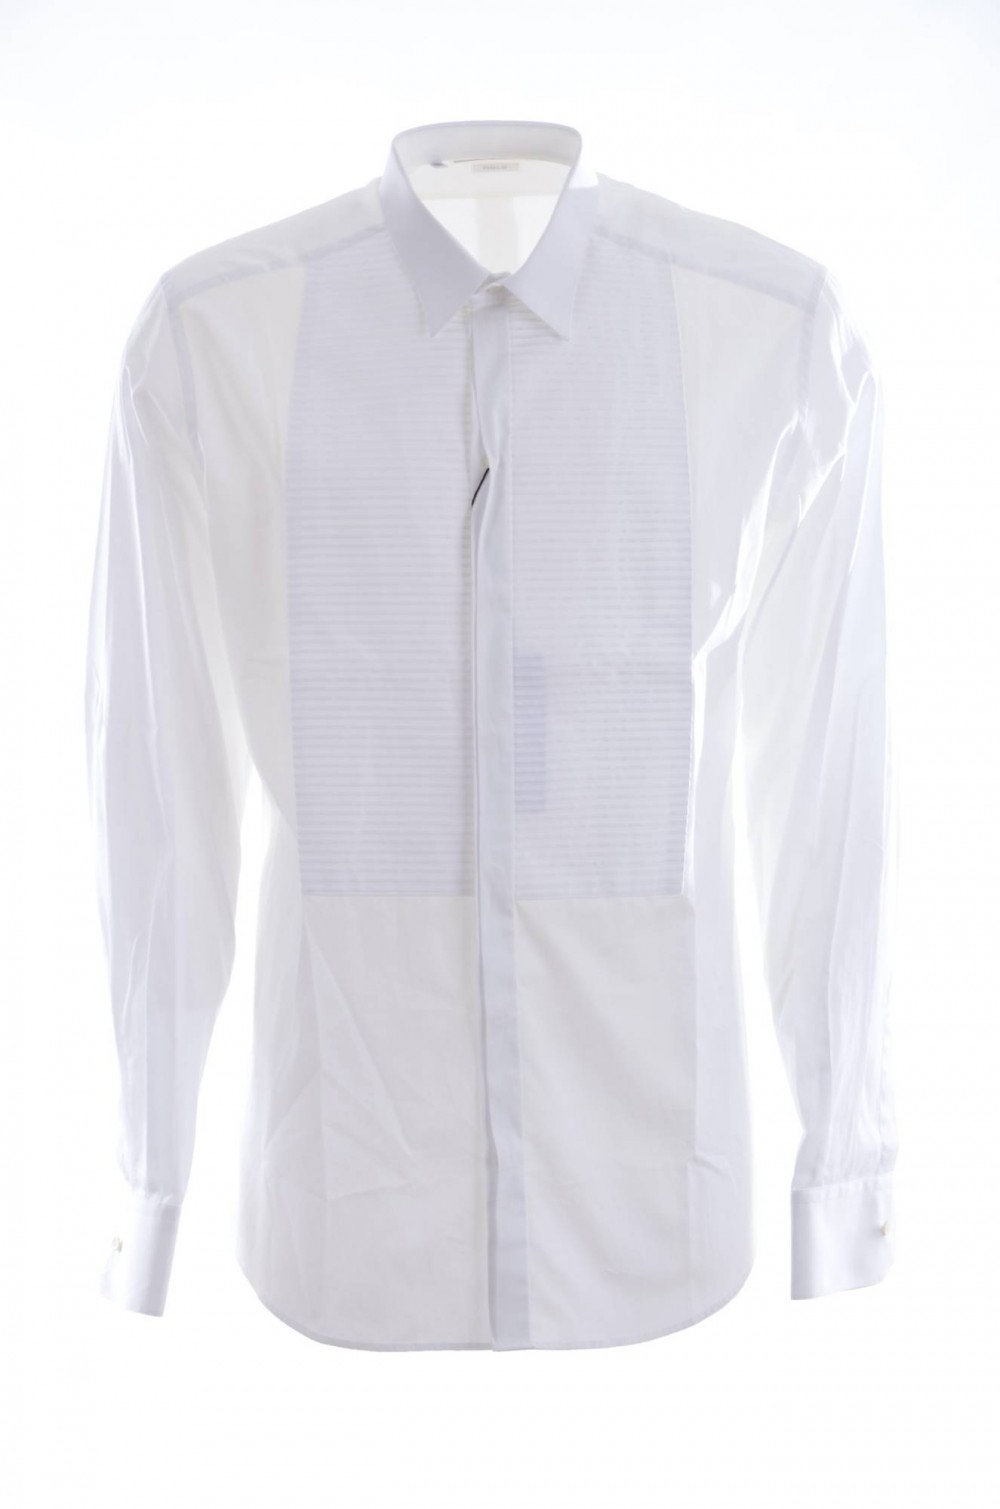 dolce and gabbana white long sleeve shirt